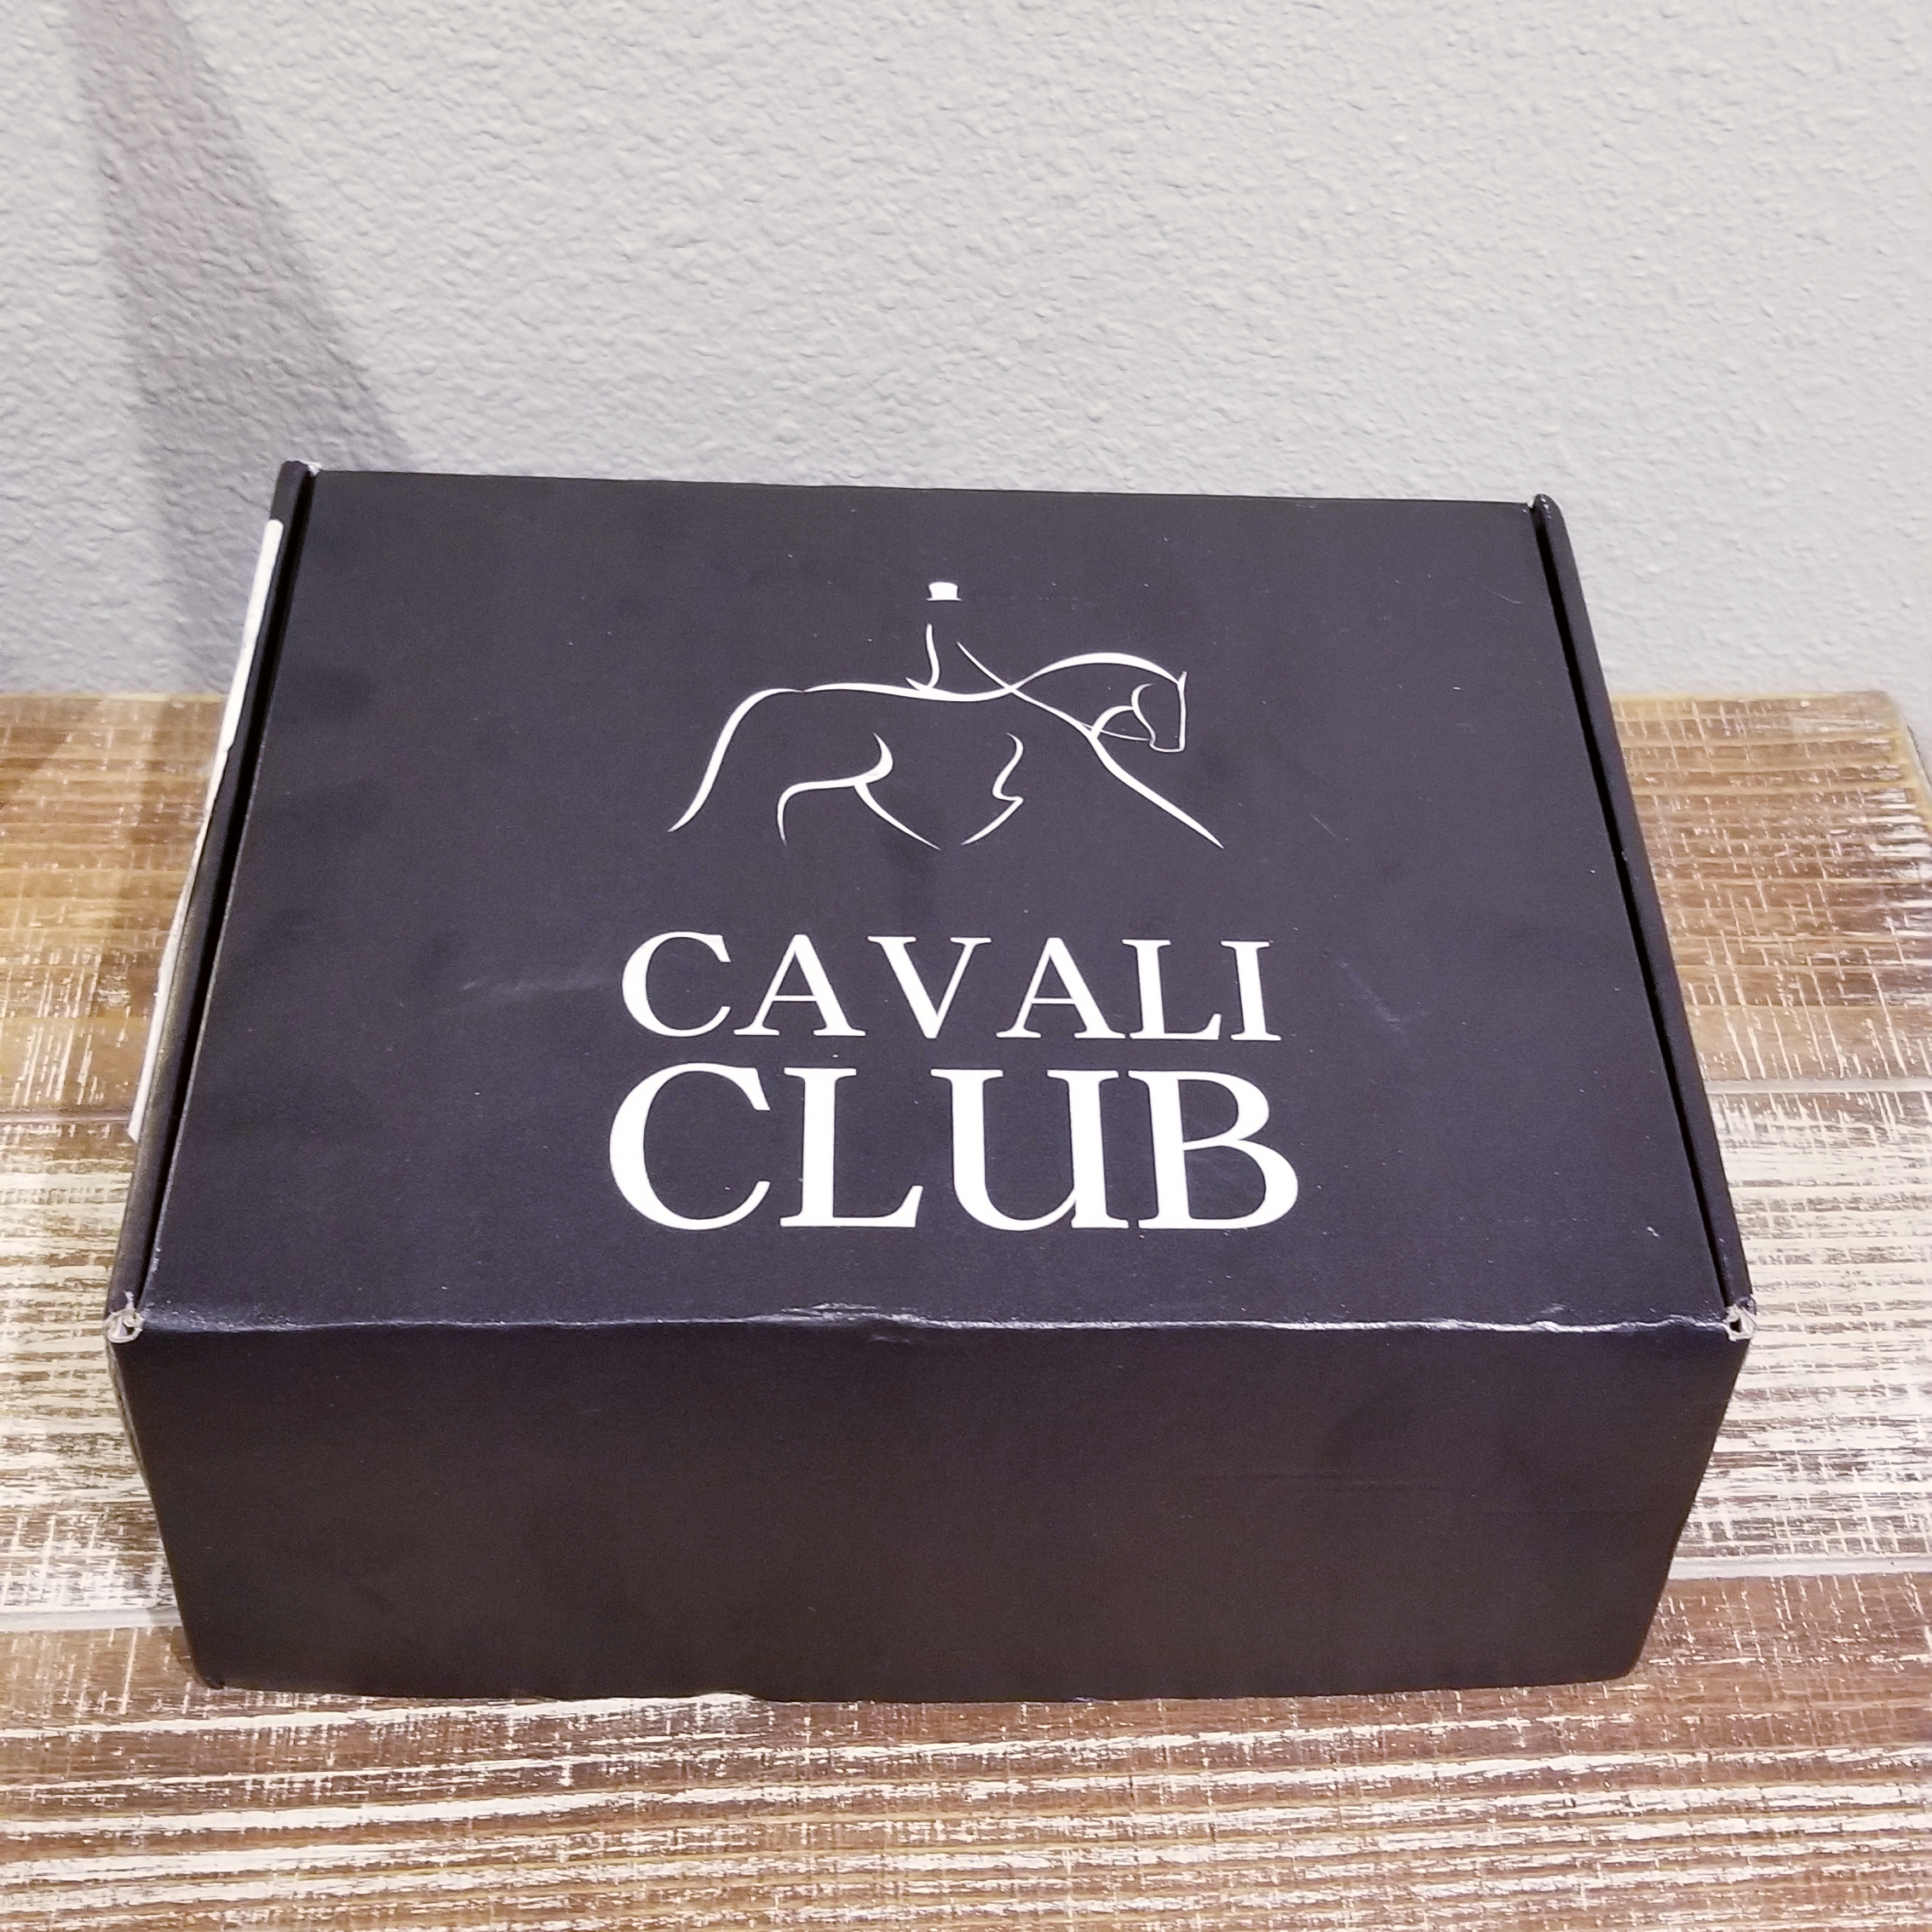 Cavali Club Subscription Box